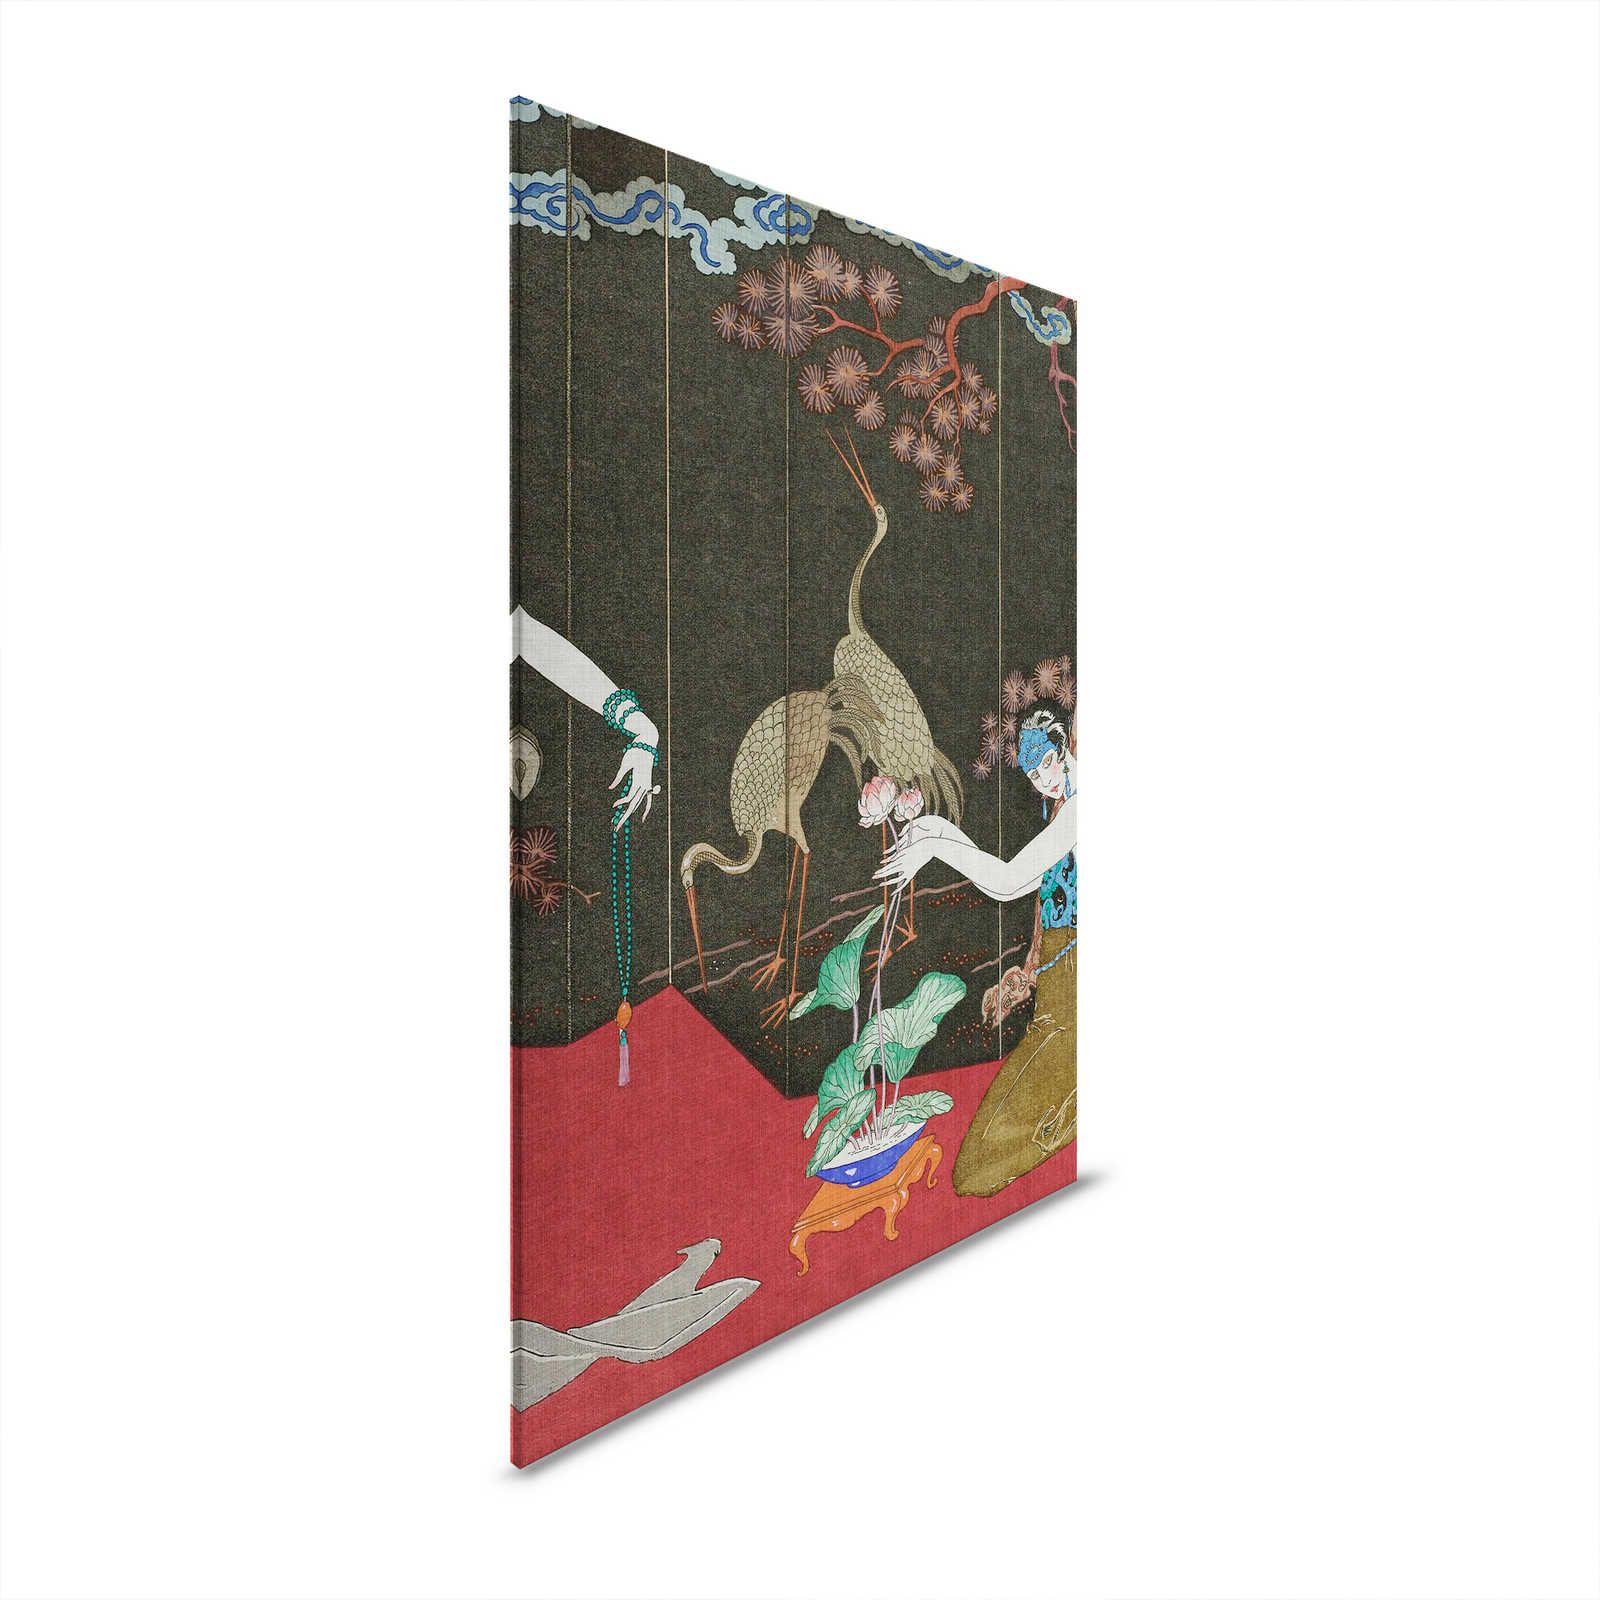         Babylon 1 - Leinwandbild Kunstdruck Klassisch Asiatisch Inspiriert – 0,90 m x 0,60 m
    